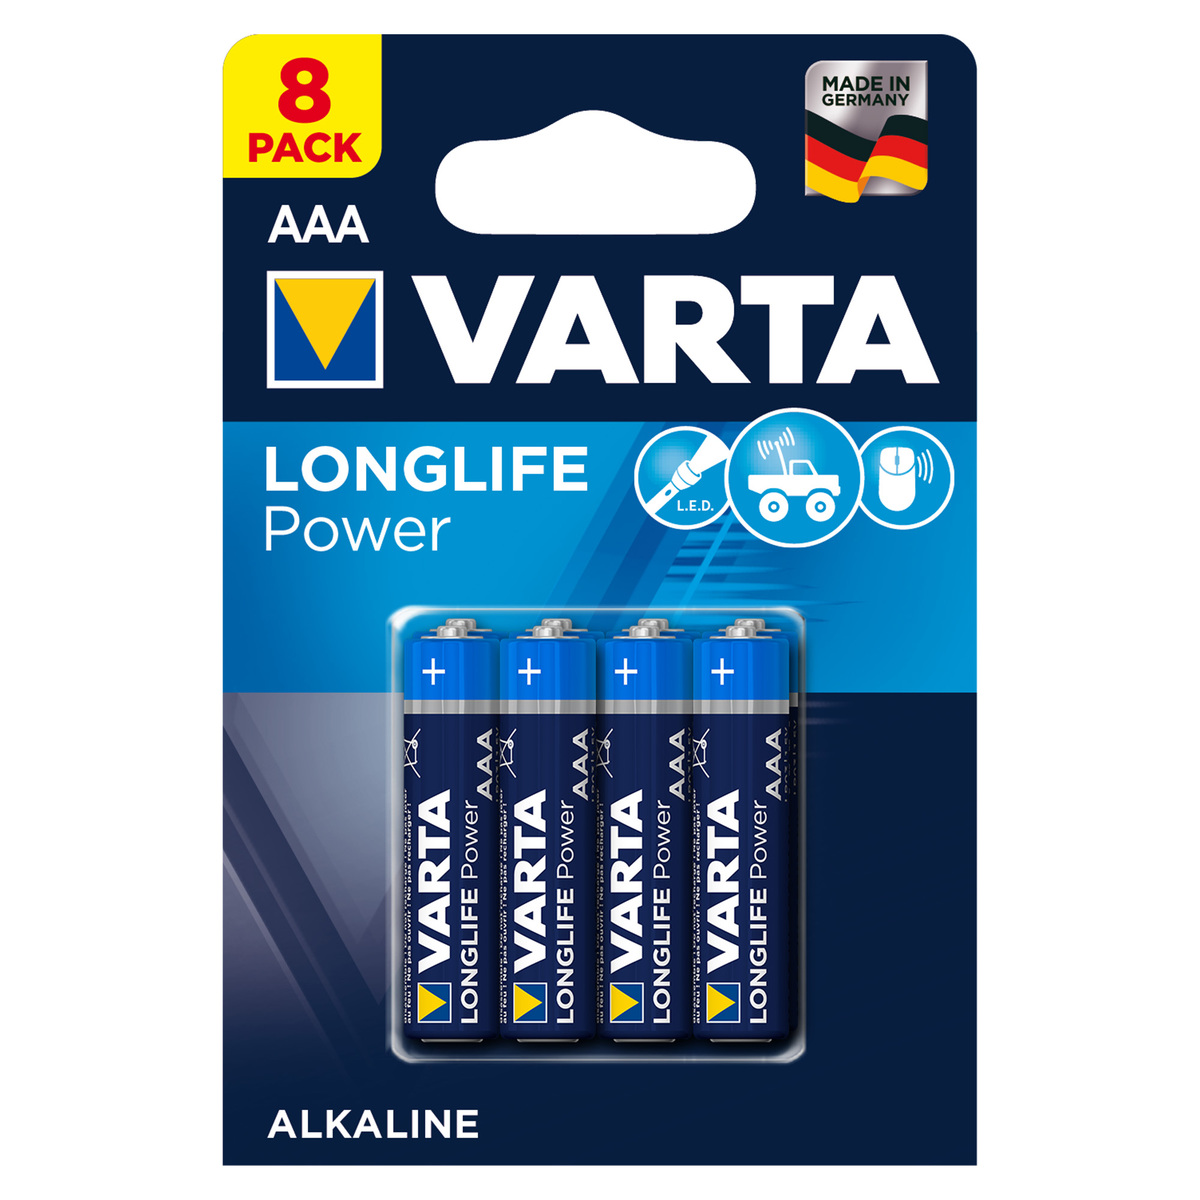 Varta  Long Life Power AAA Alkaline Battery 8pcs